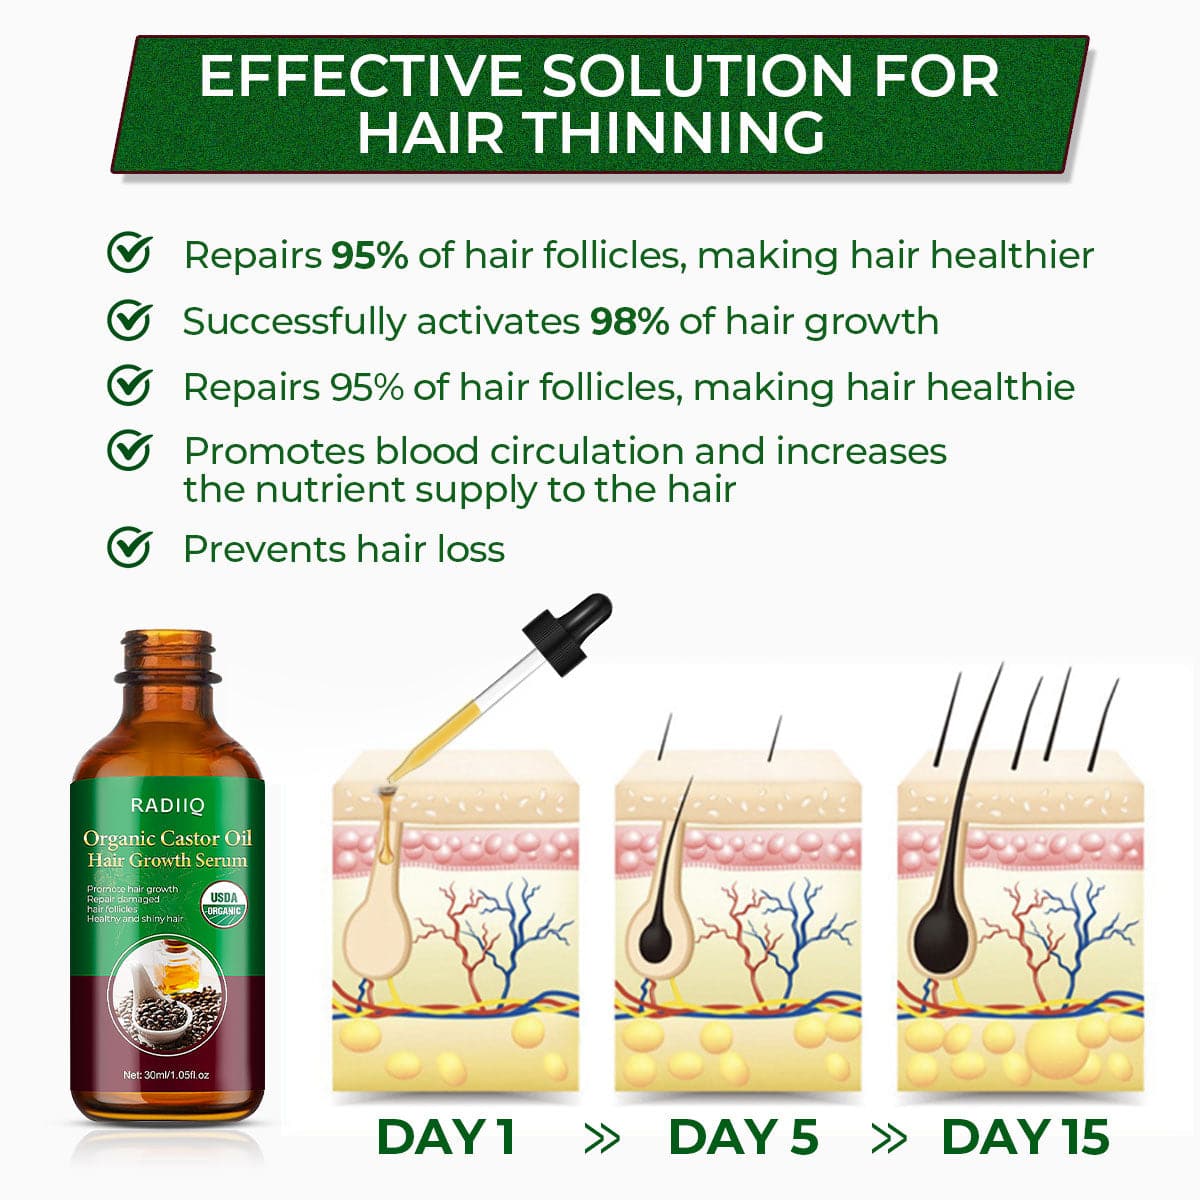 RADIIQ Organic Castor Oil Hair Growth Serum MAX